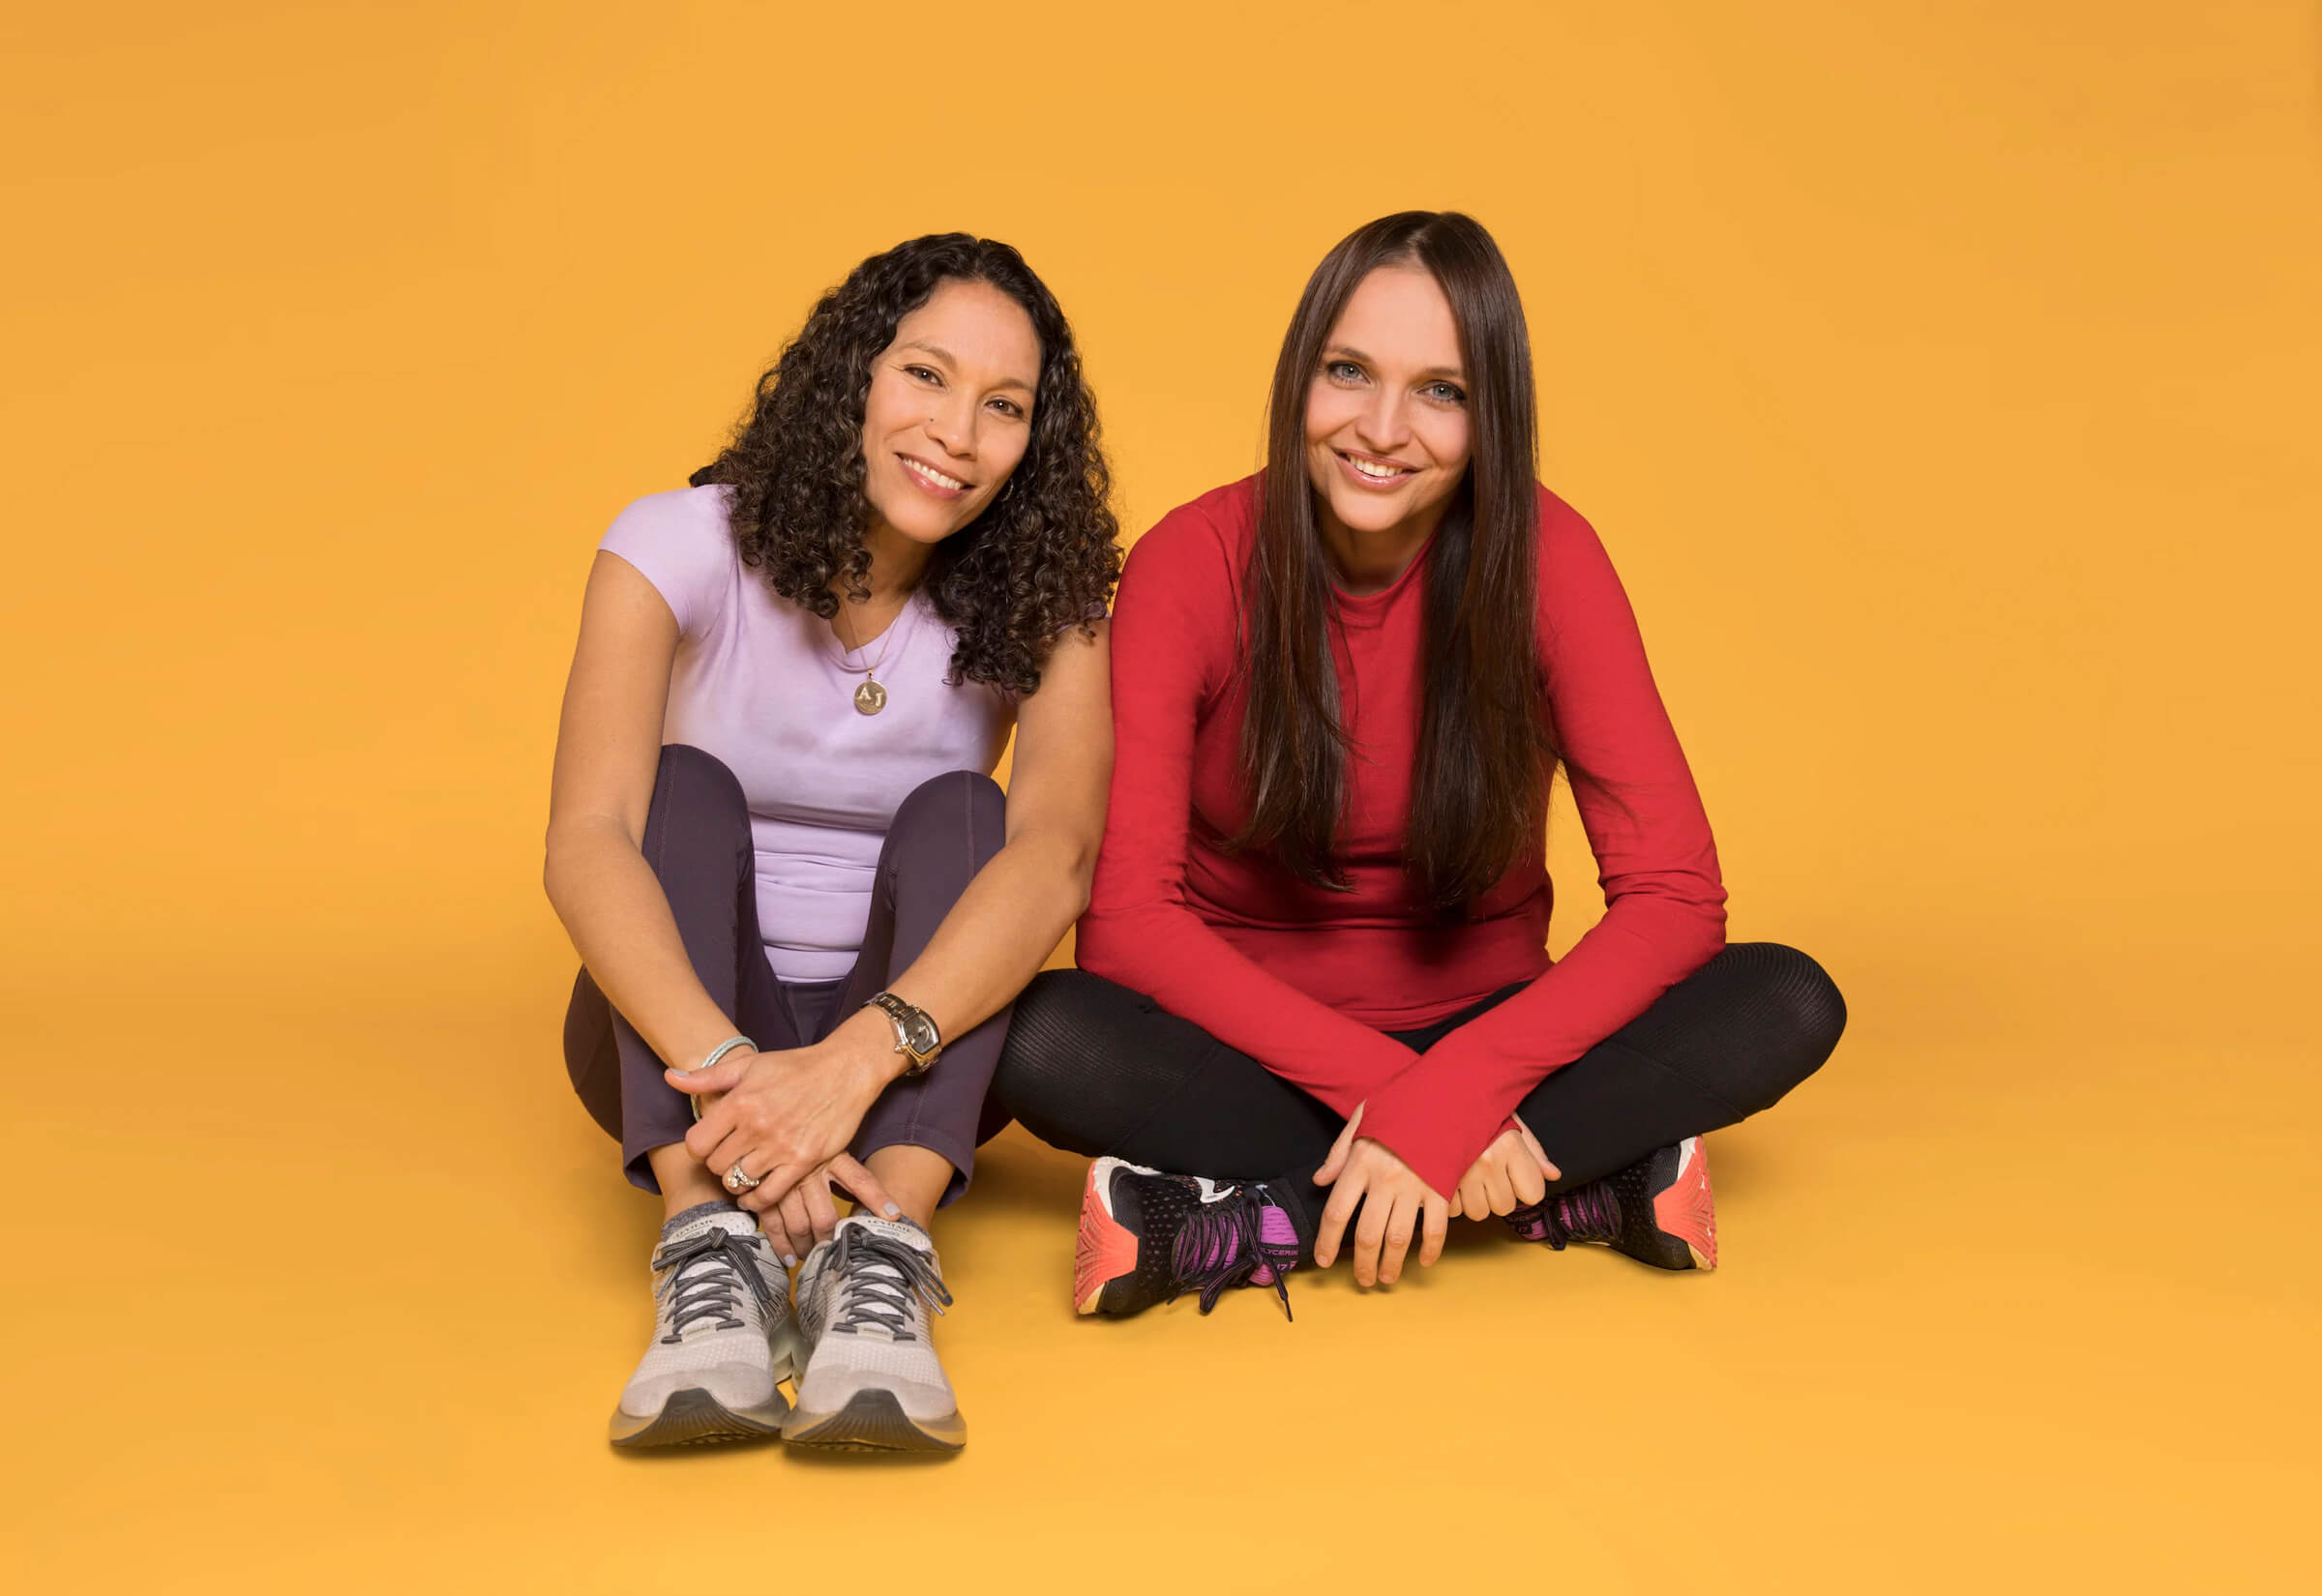 NOAP Cofounders Katie Assaraf and Millie Rodriguez